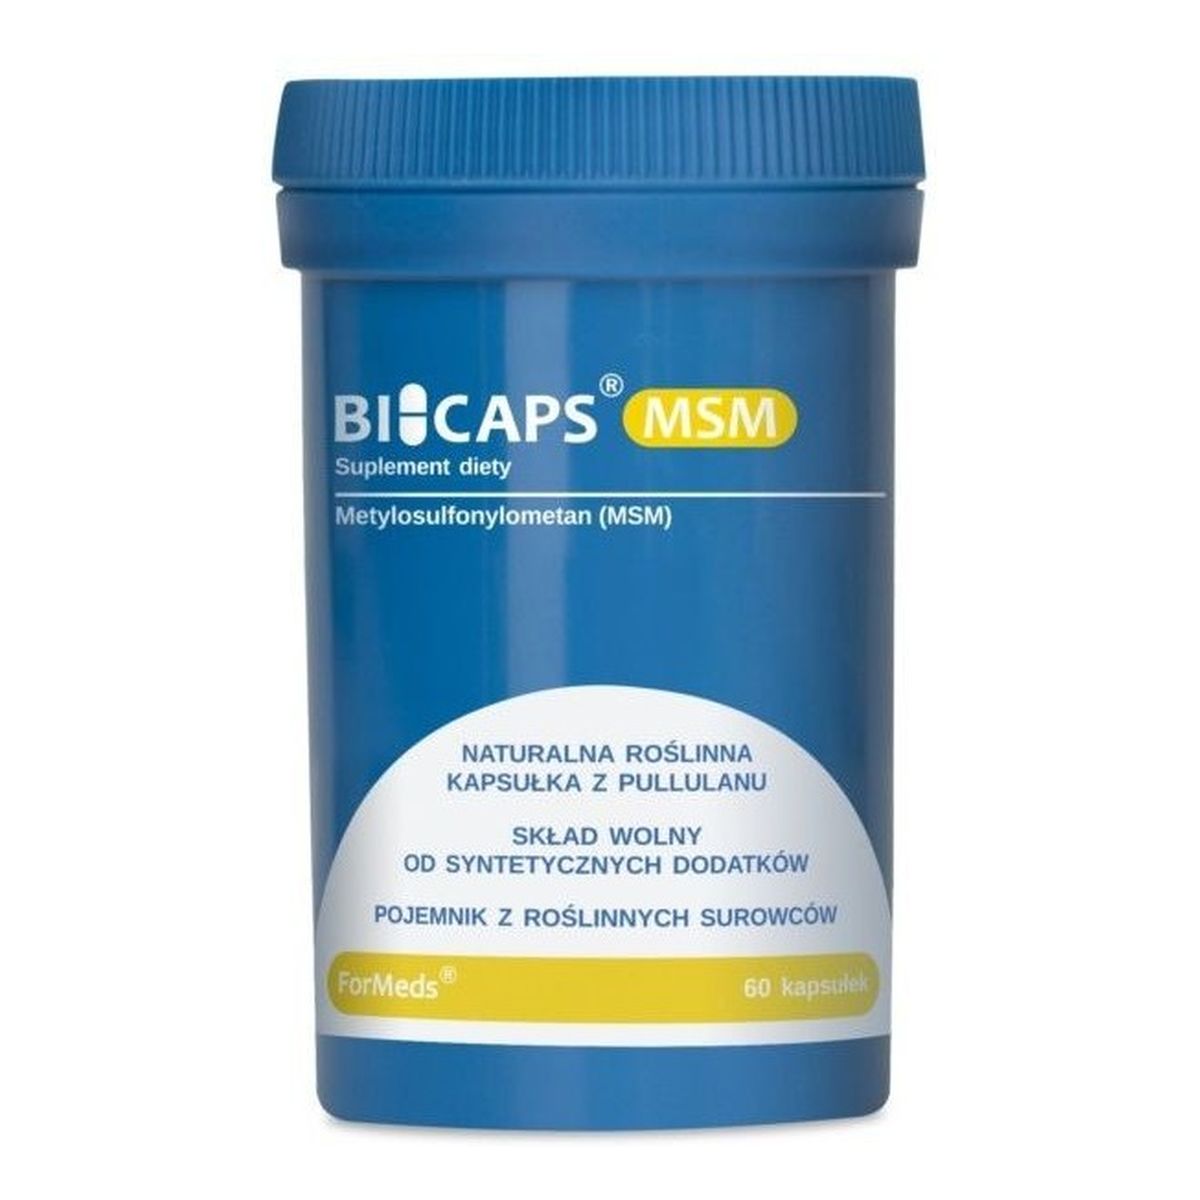 Formeds Bicaps MSM suplement diety 60 Kapsułek